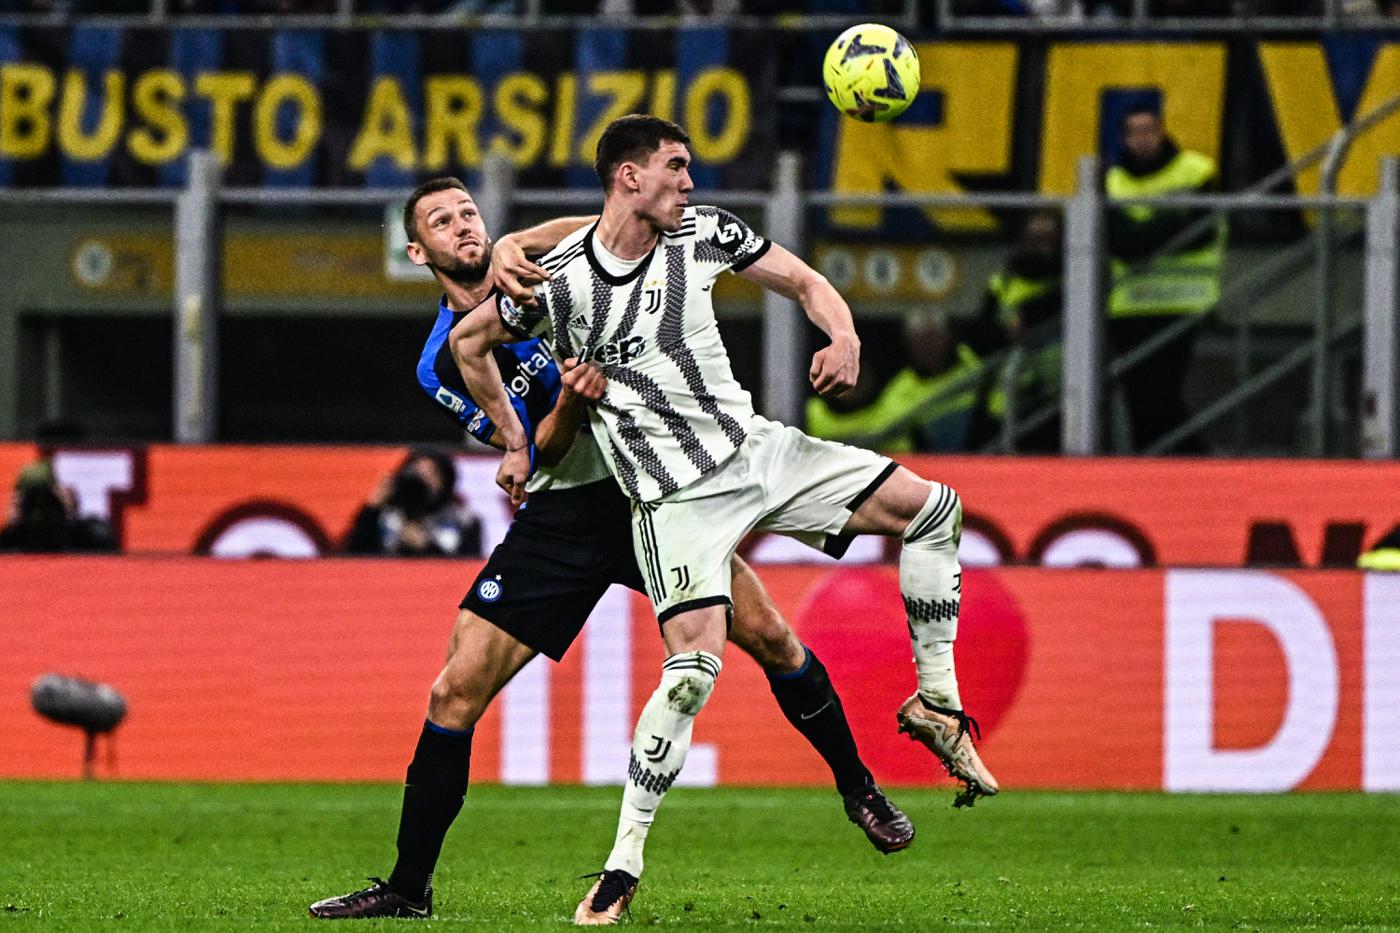 Inter - Juventus - 0-1. Italian Championship, round 27. Match review, statistics